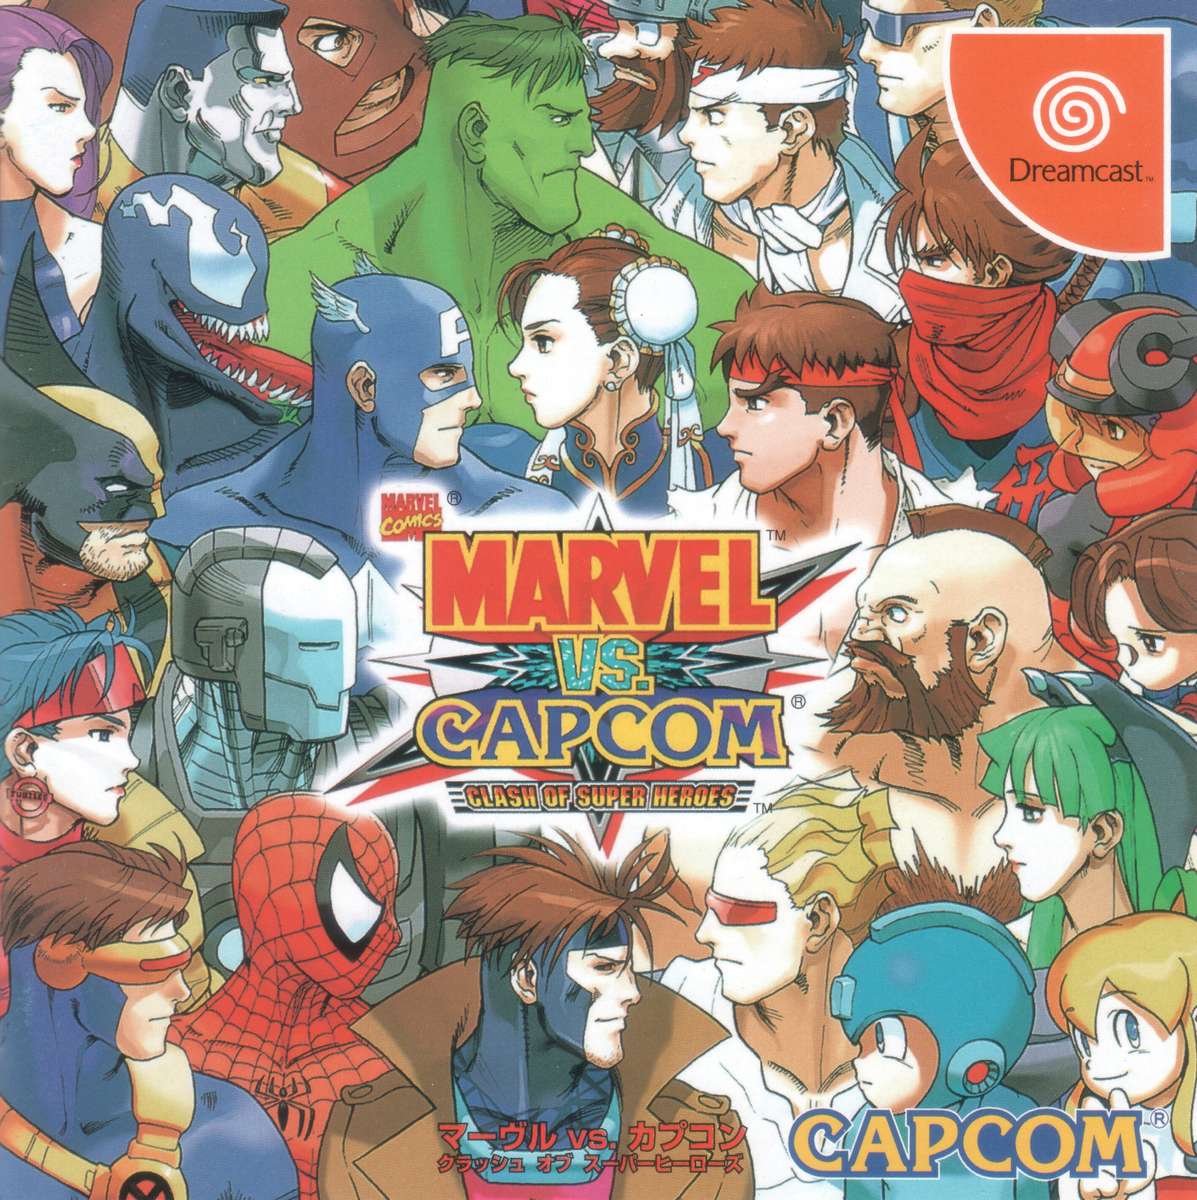 Marvel kontra Capcom puzzle online ze zdjęcia